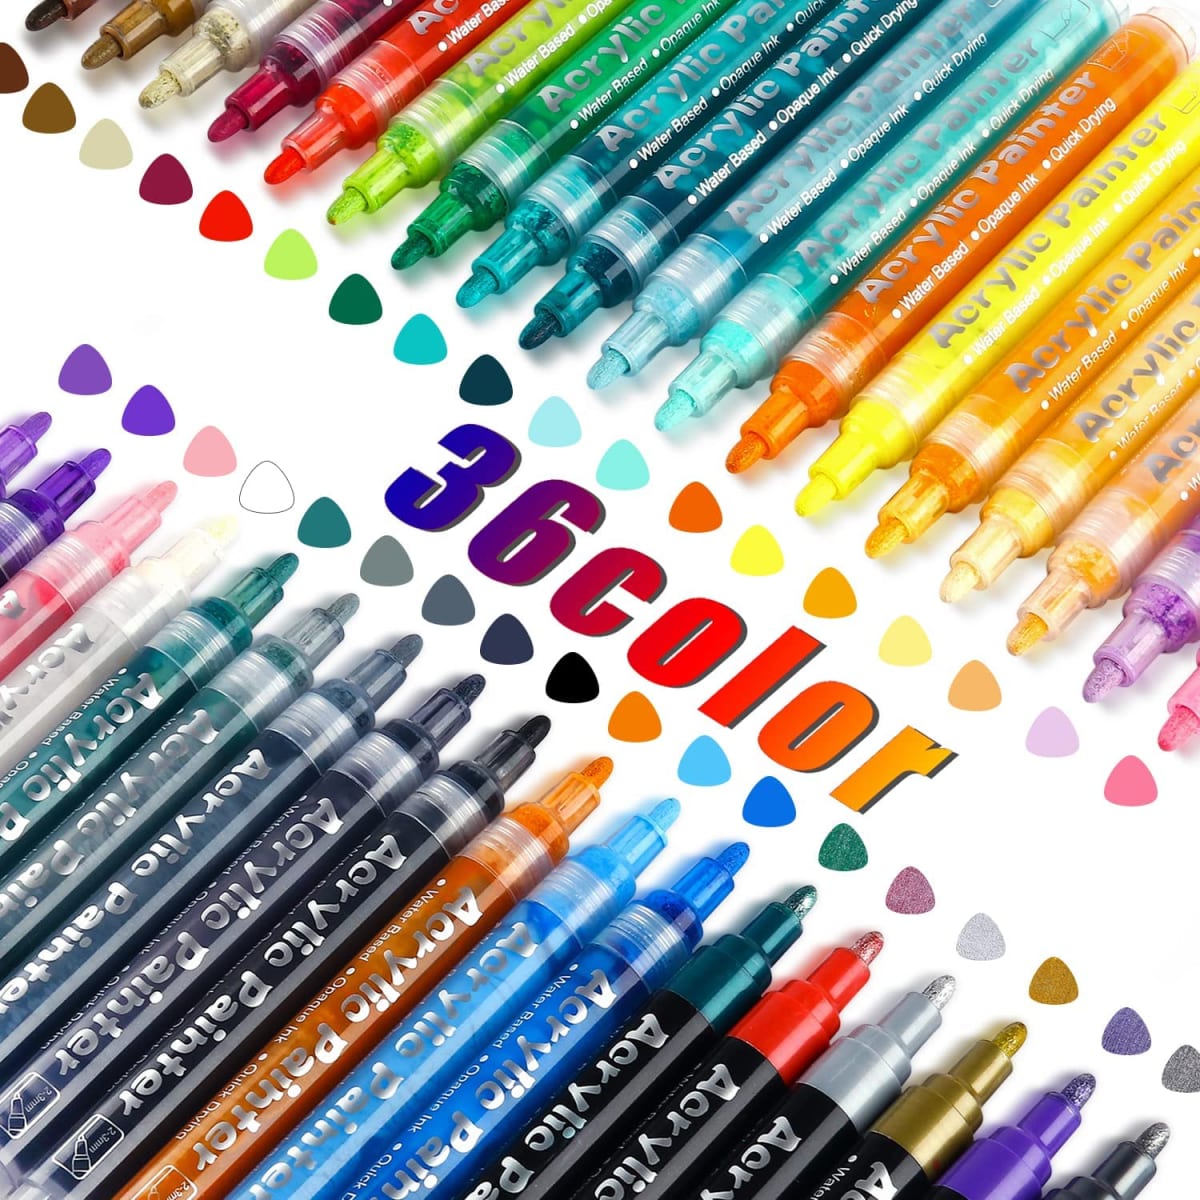 FUMILE Acrylic Paint Pens